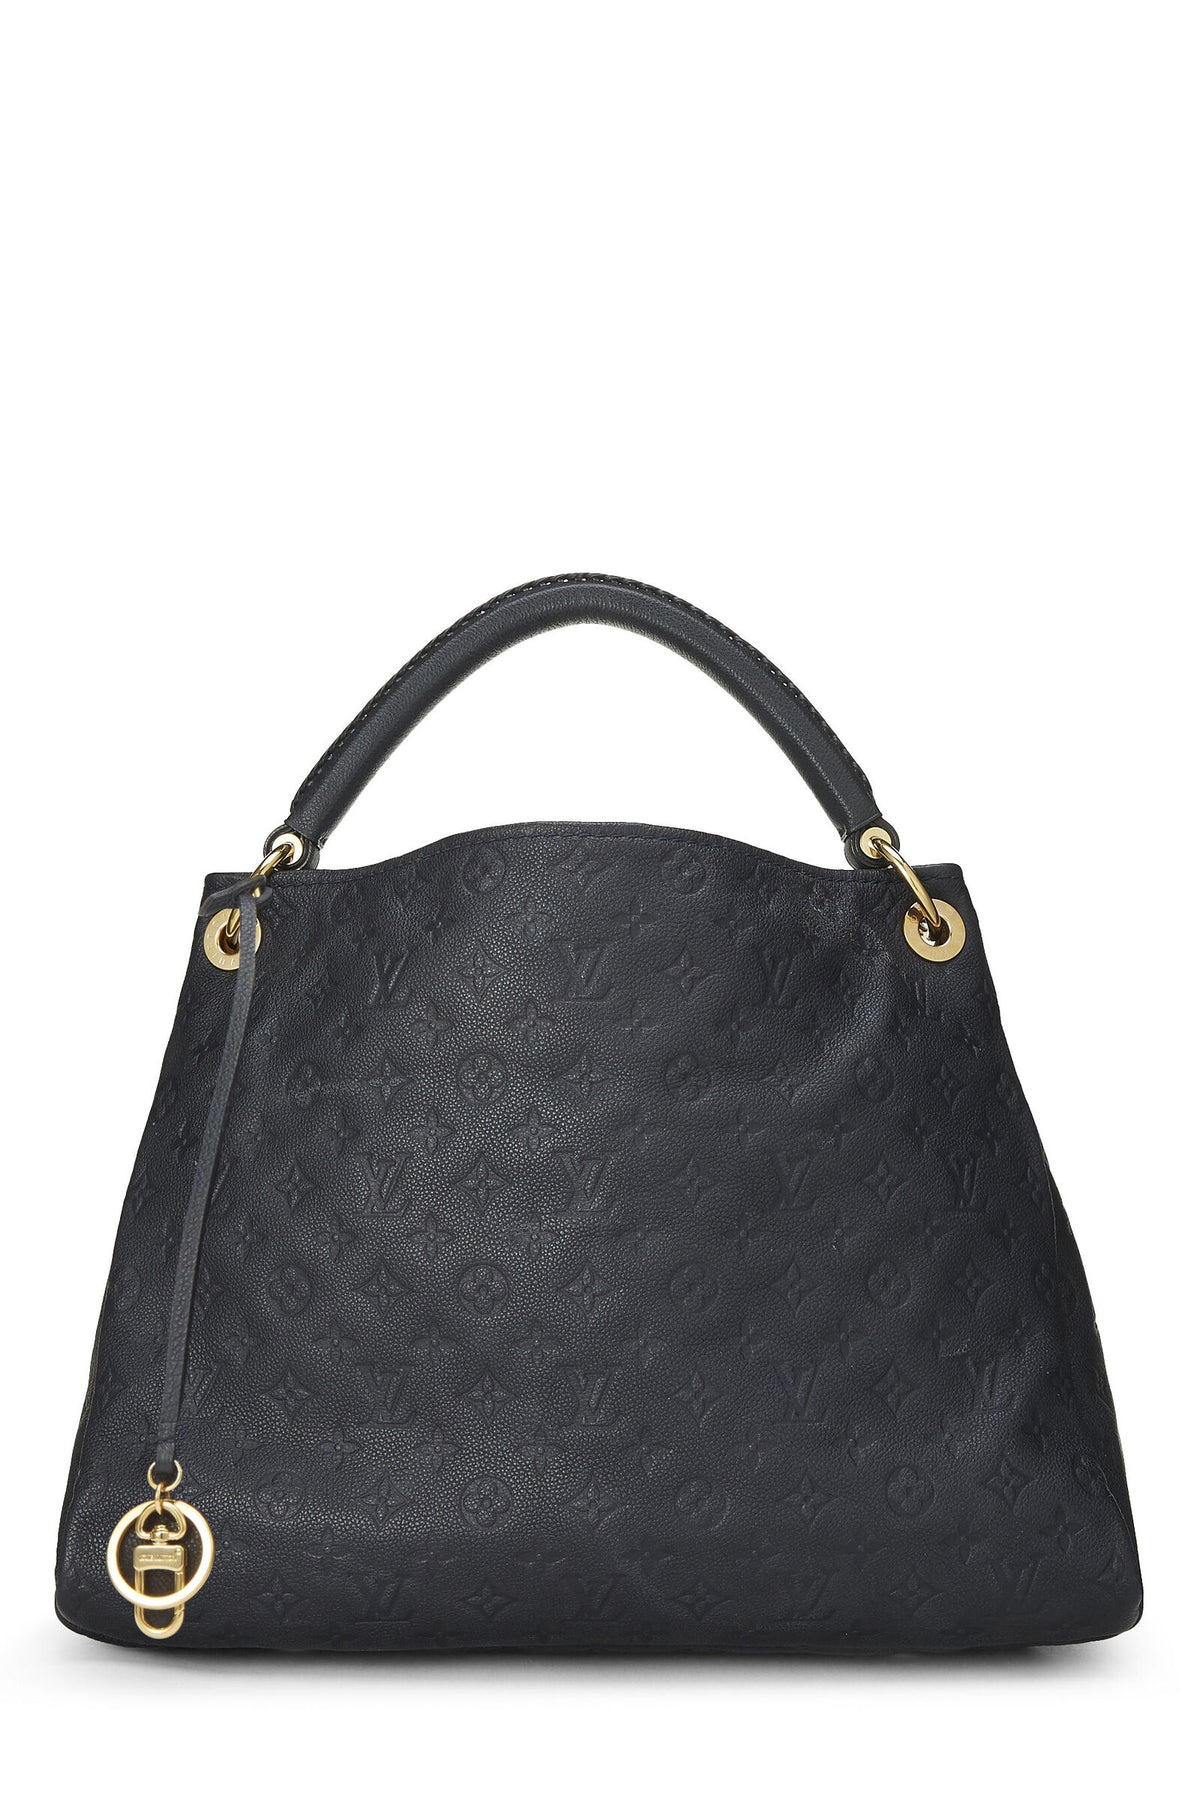 Louis Vuitton Cream Monogram Empreinte Leather Artsy MM Bag at